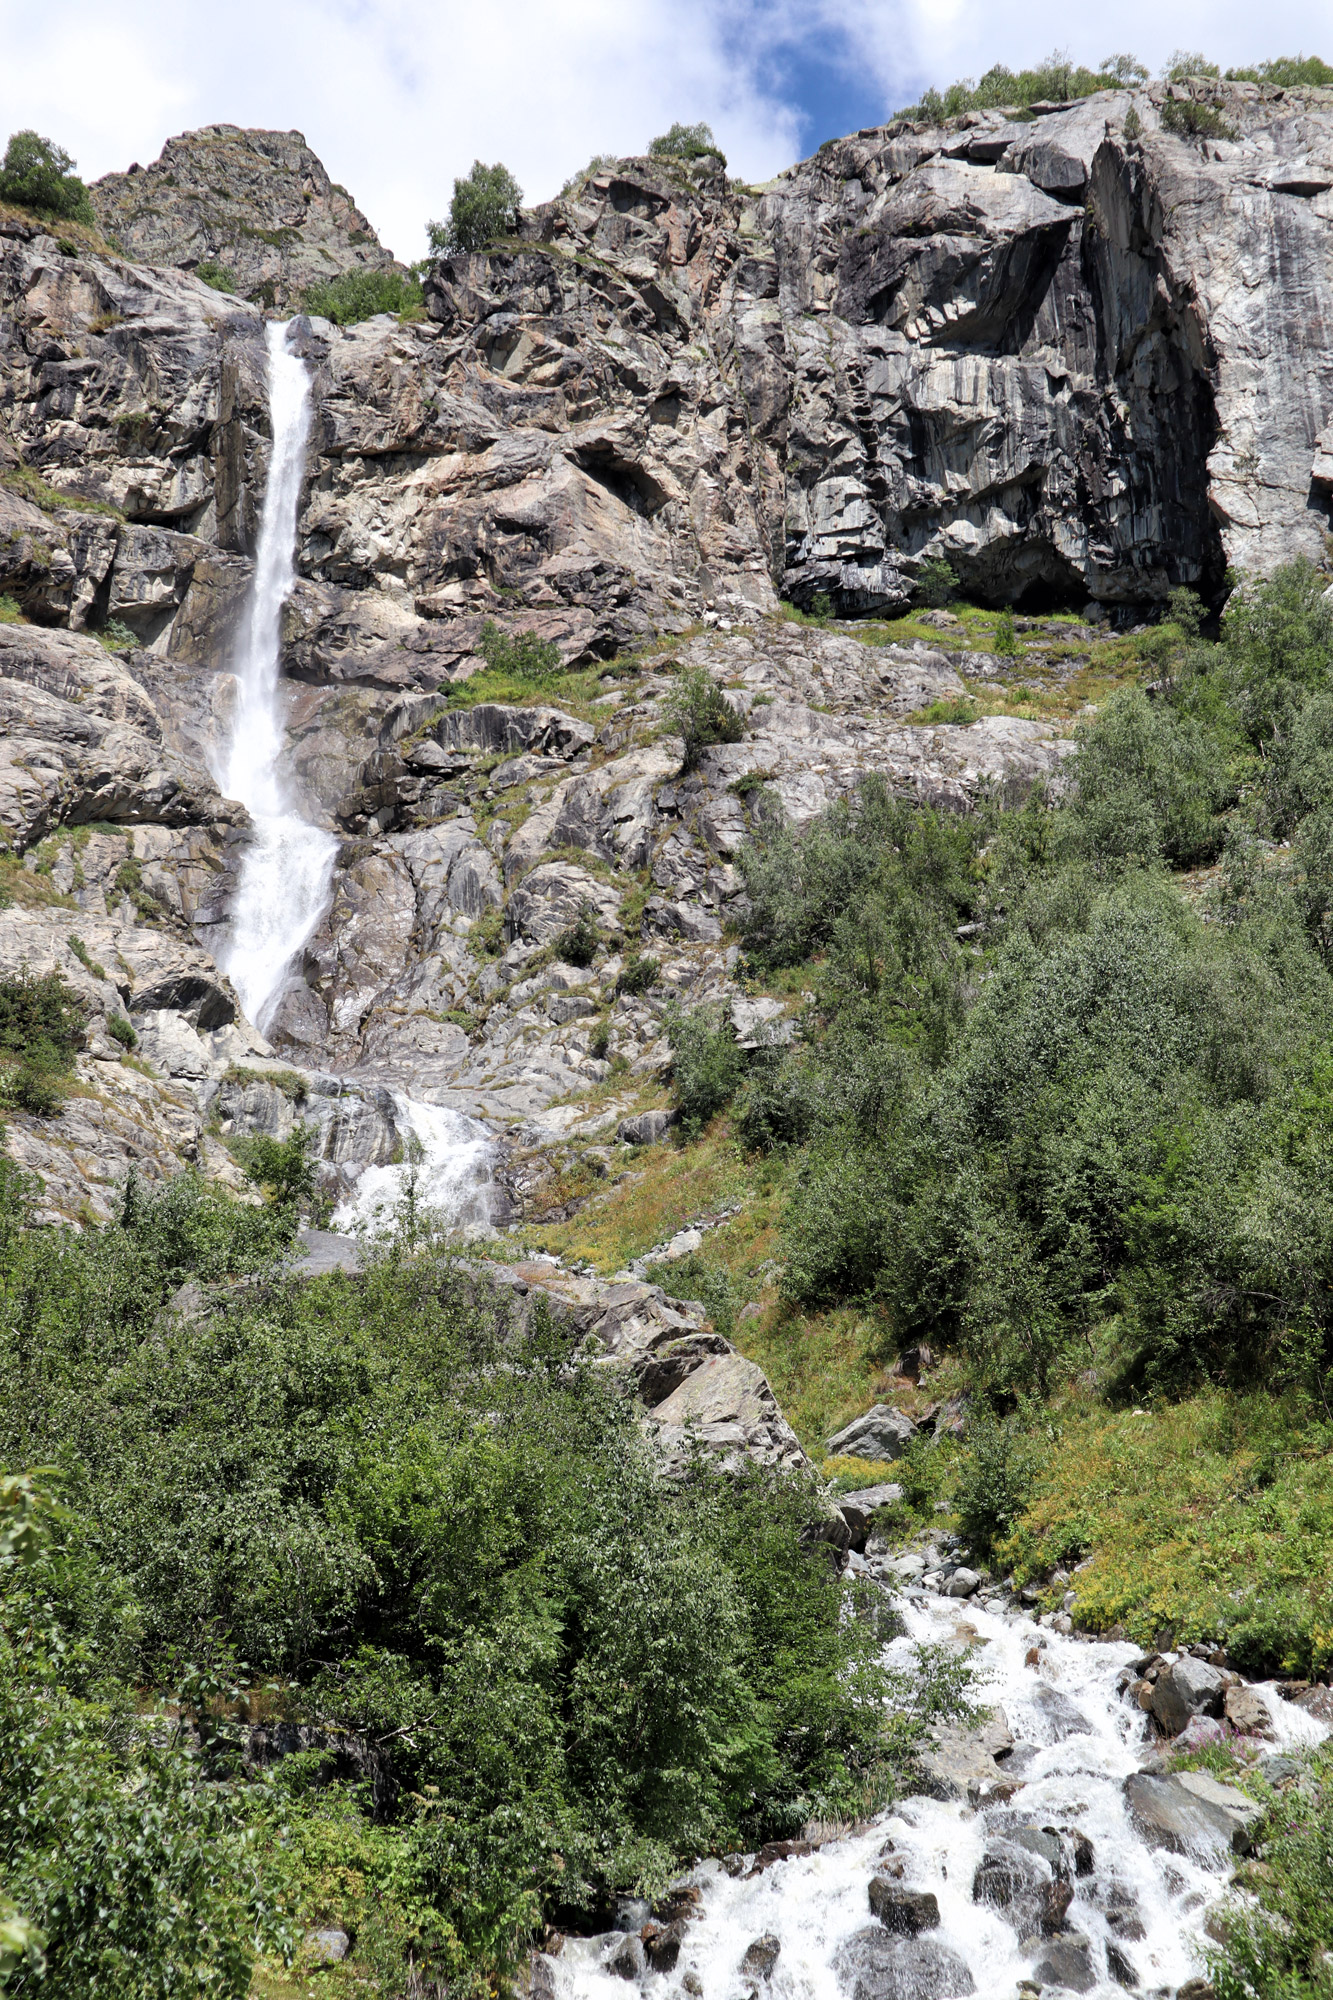 Georgië reisverslag - Wandelen naar de Shudgra waterval